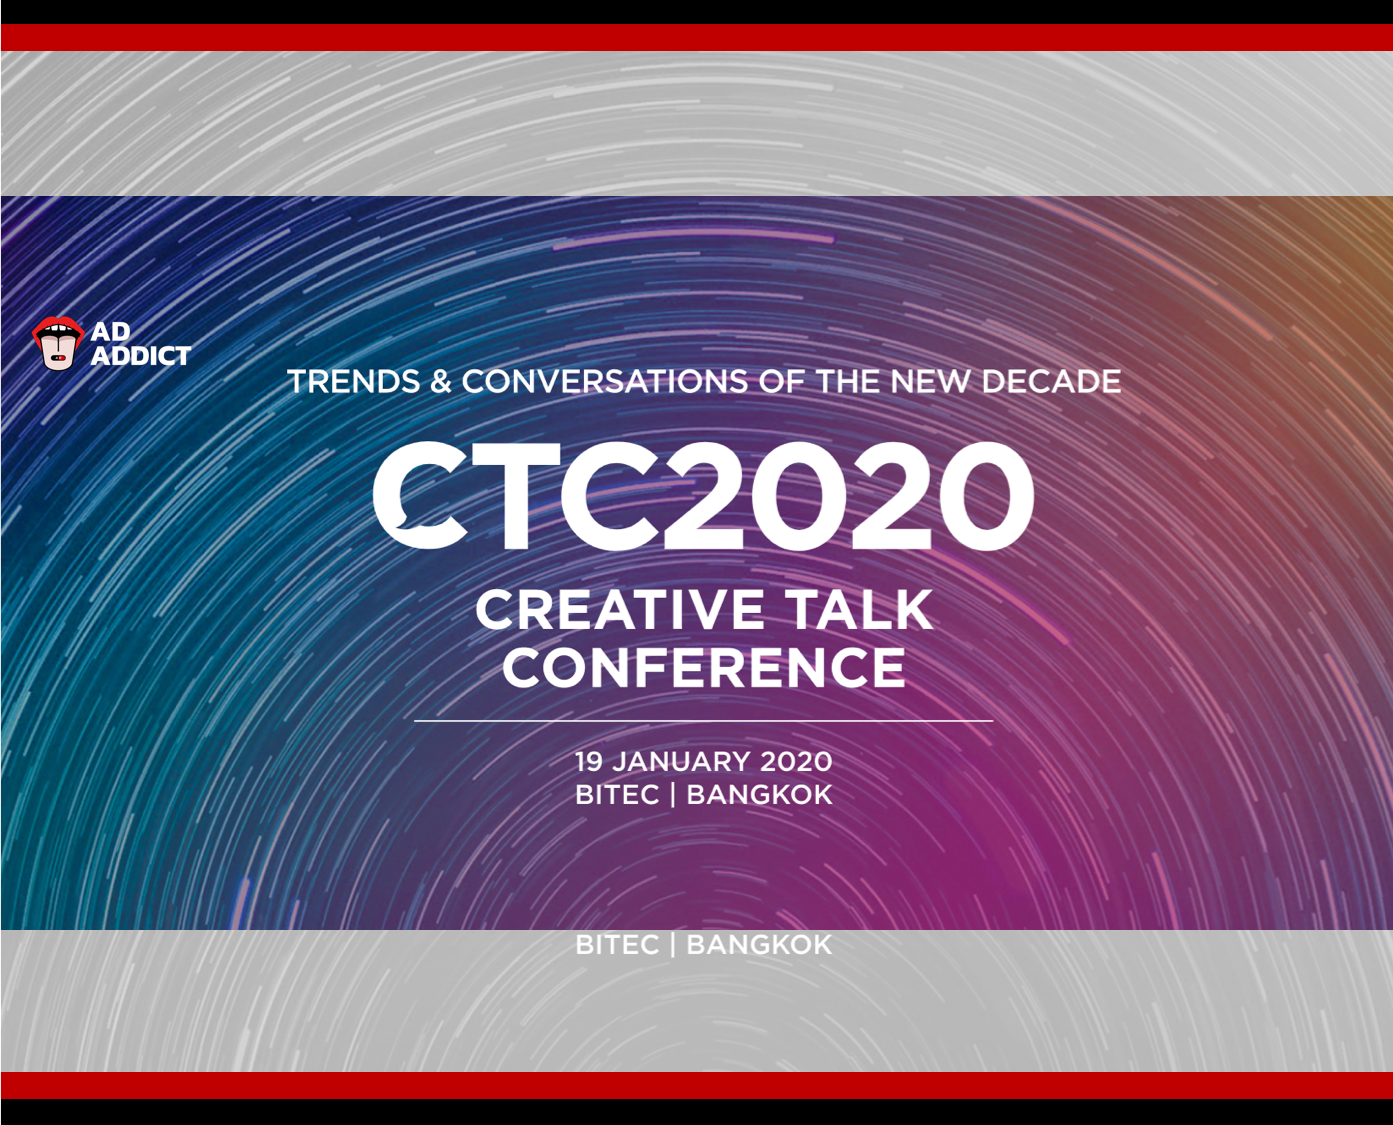 Creative Talk Conference 2020 กลับมาอีกครั้ง! พร้อมคอนเซปต์ "Trends and